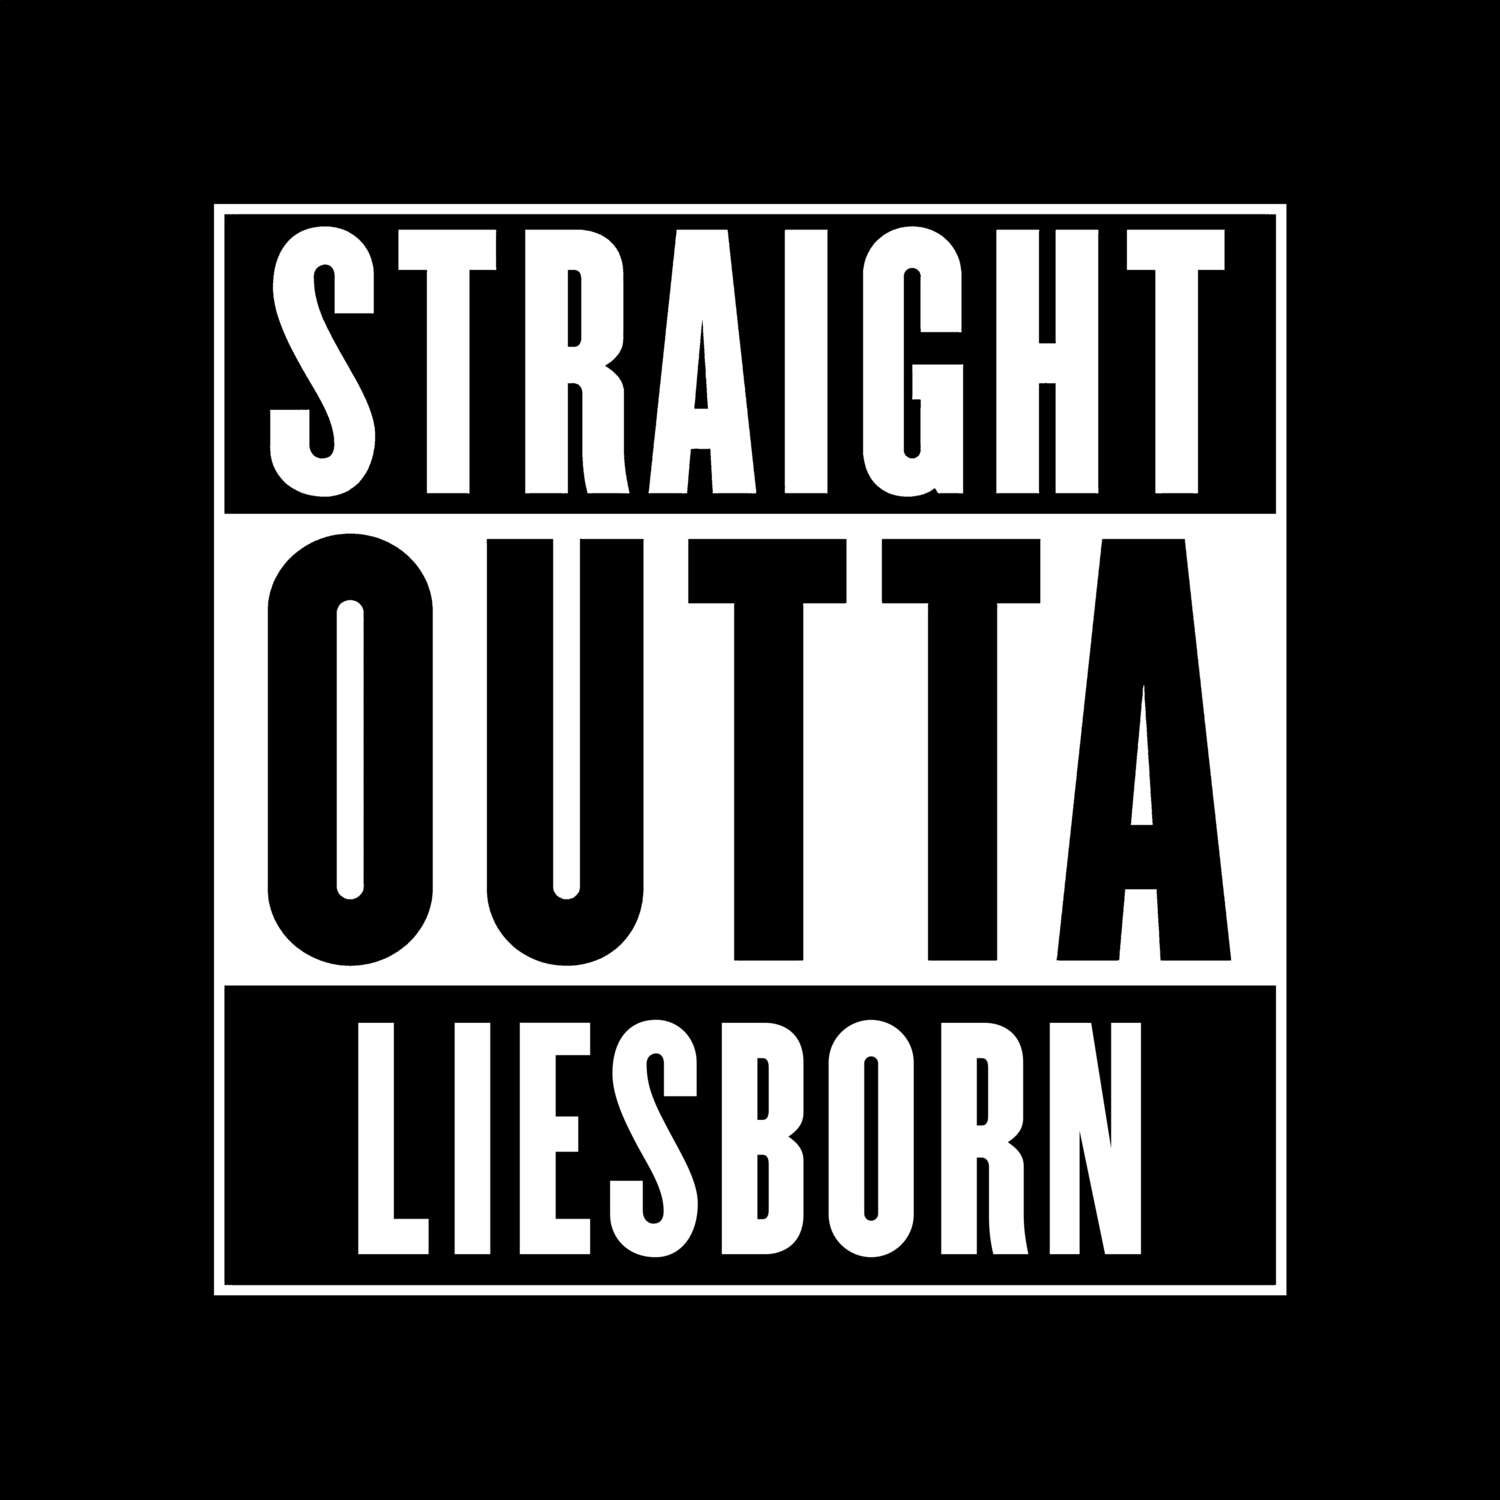 Liesborn T-Shirt »Straight Outta«